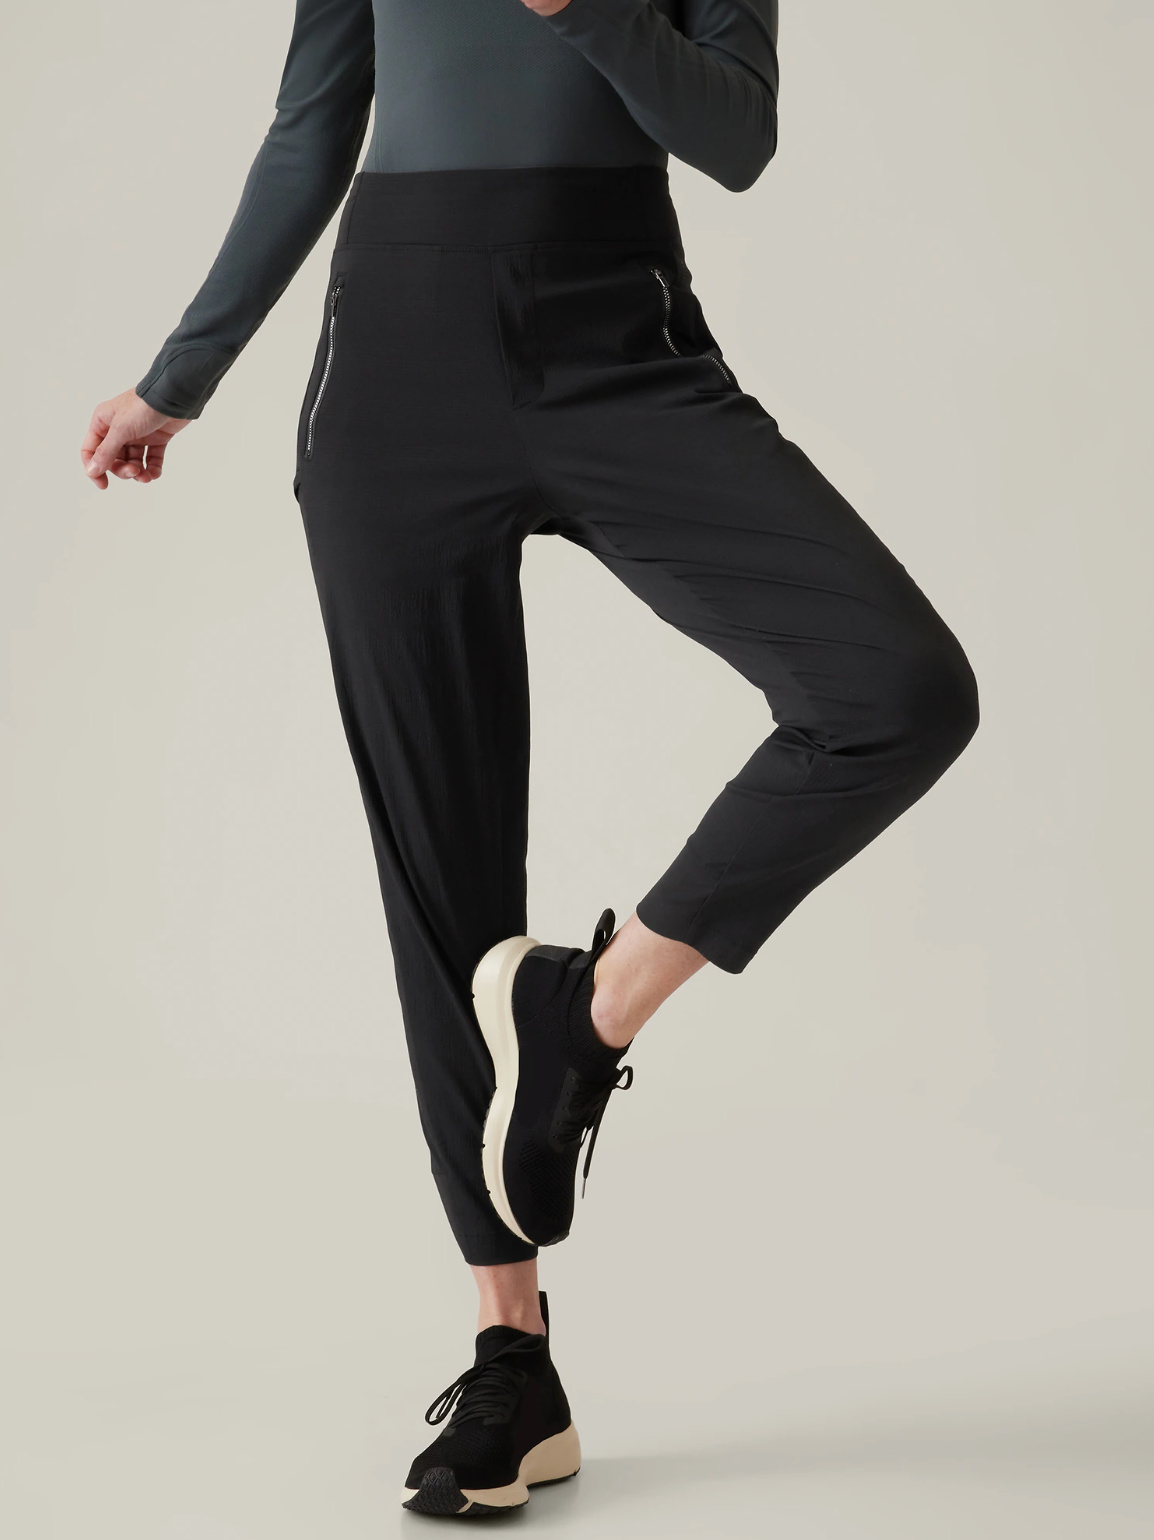 Elastic Waist Pants for Women: The Ultimate in Comfort